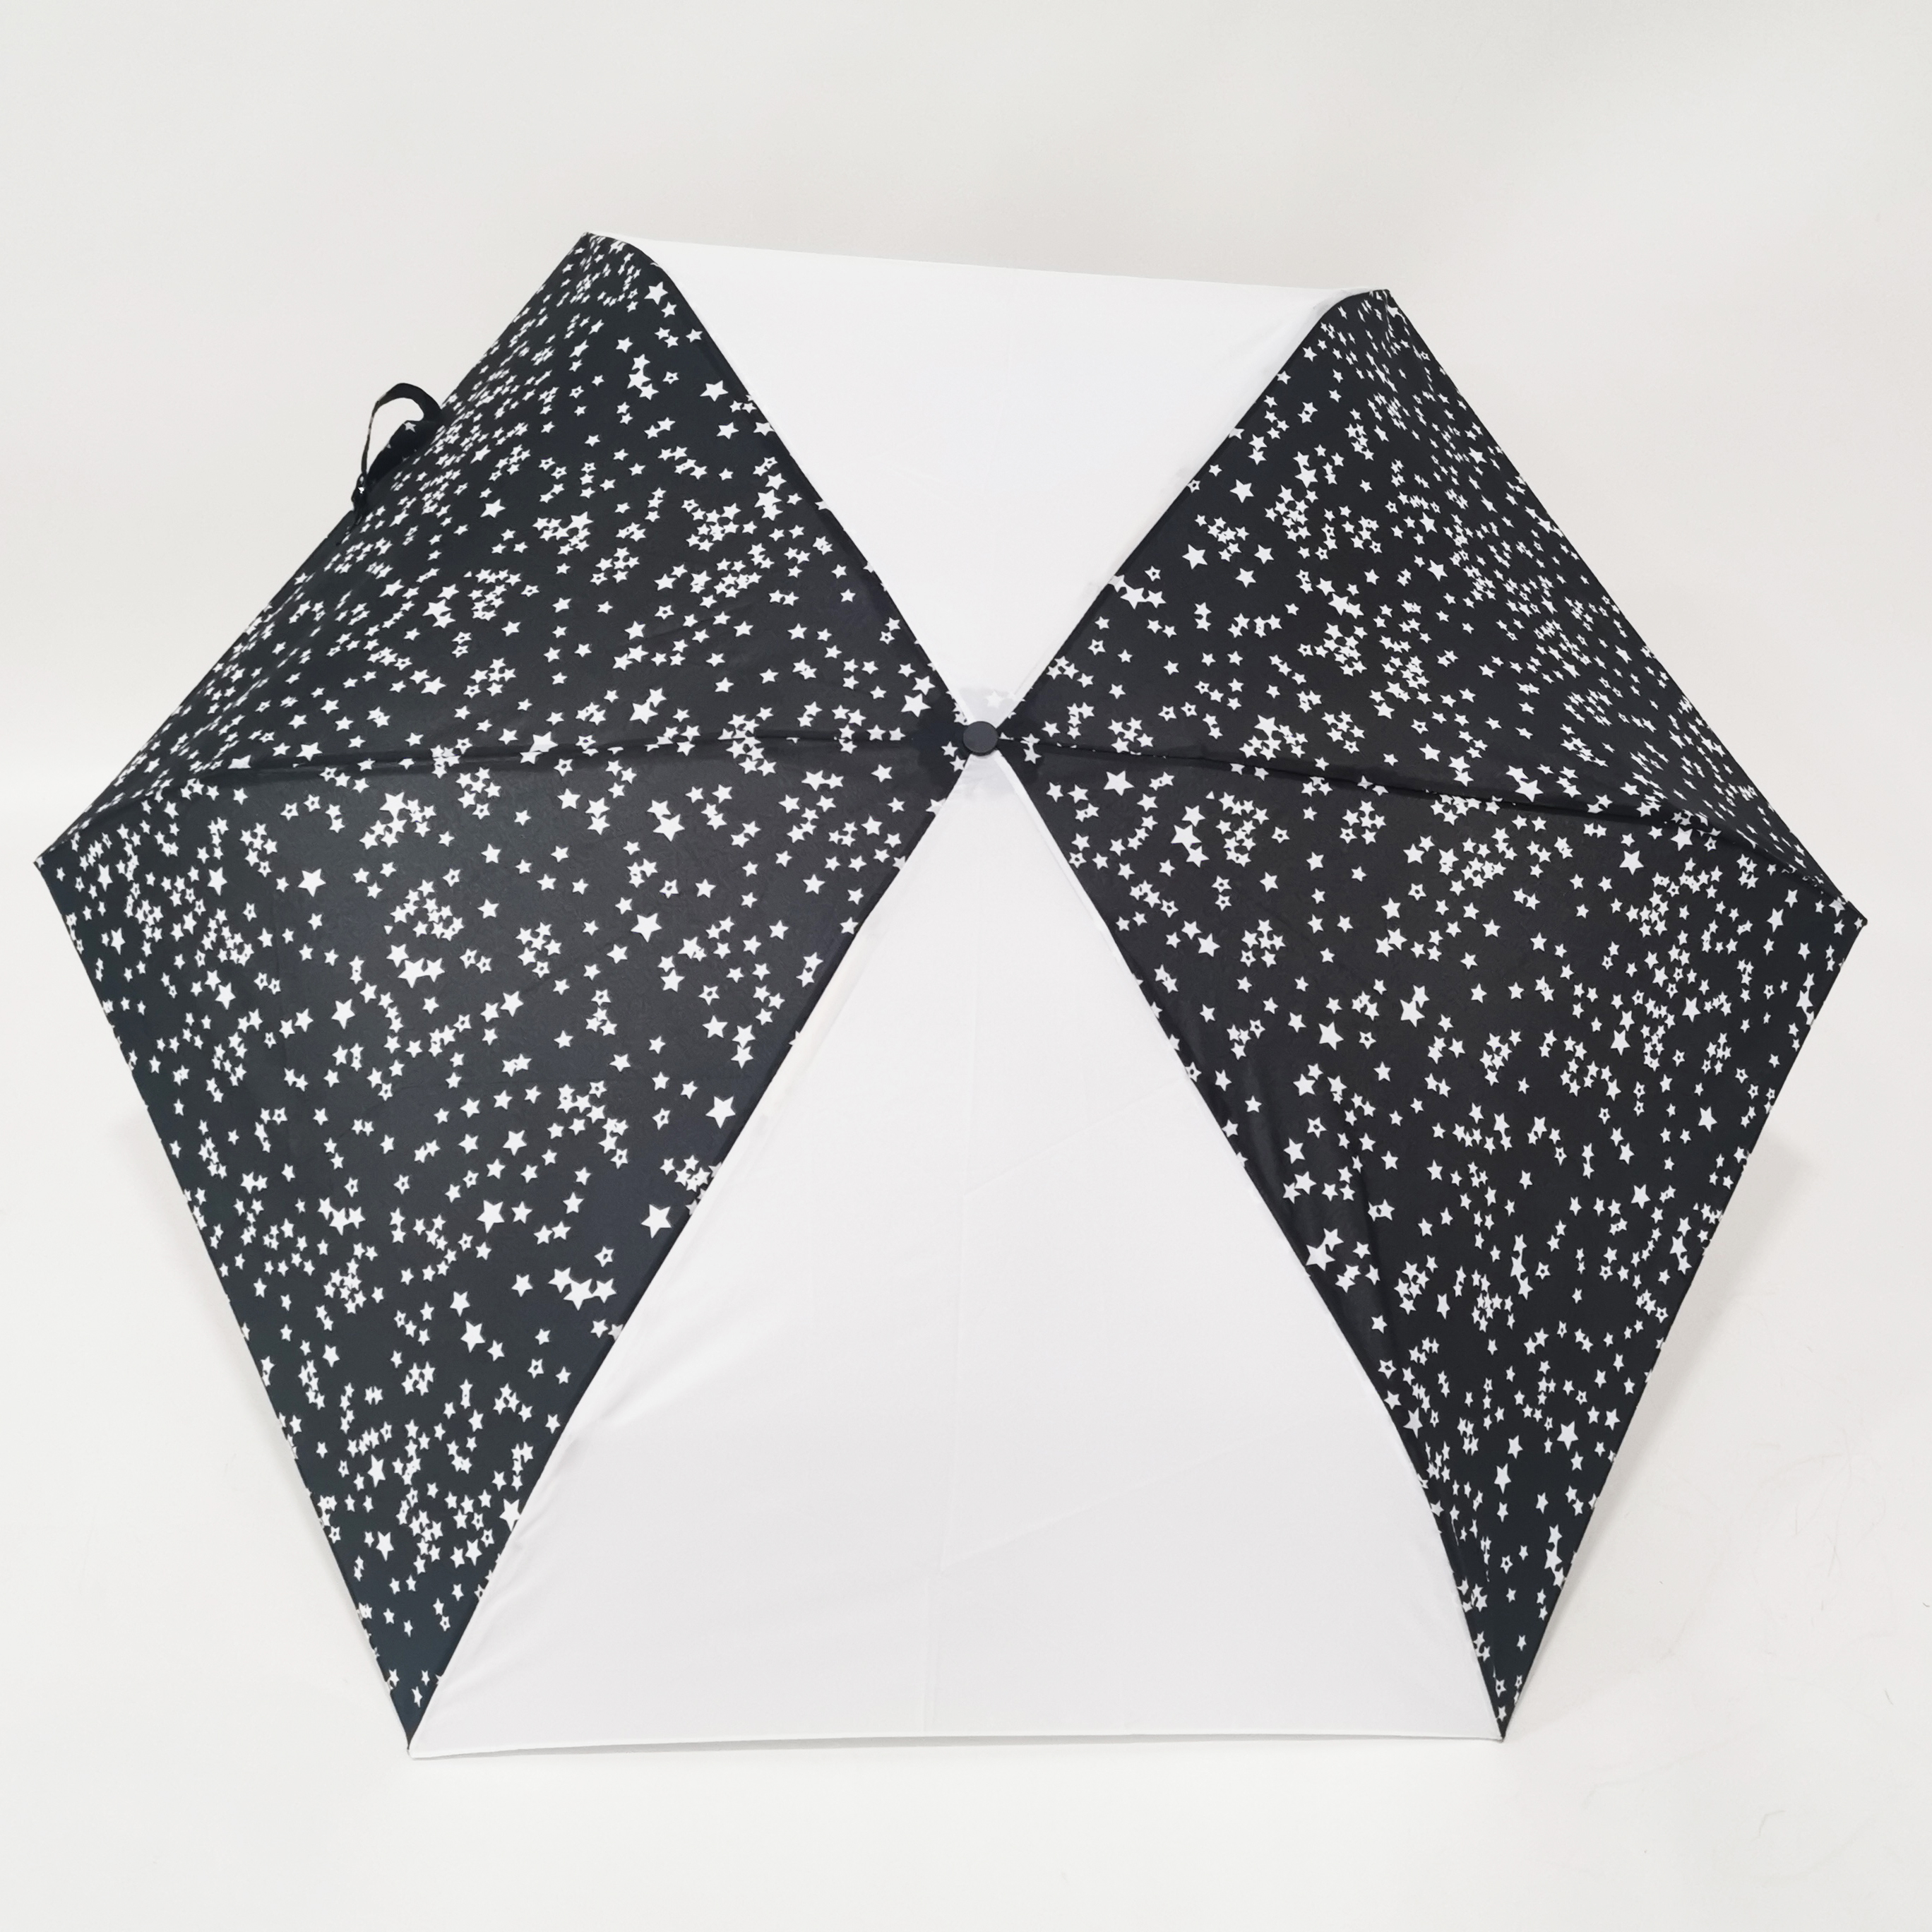 https://www.hodaumbrella.com/just-205g-an- three-folding-umbrella-product/